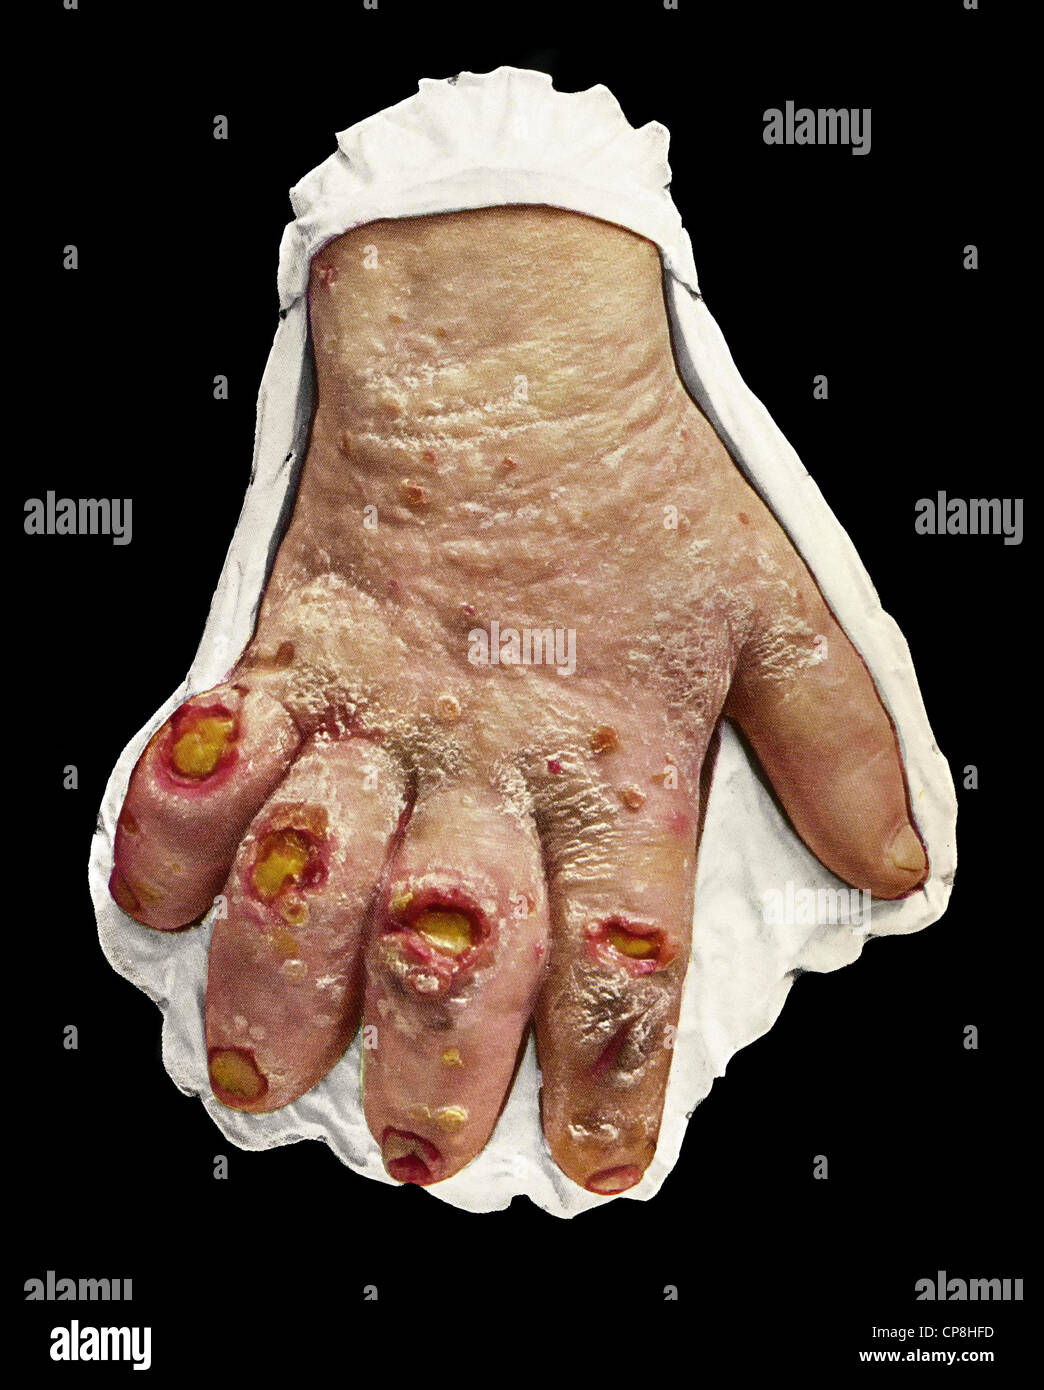 Handbemalte Abformungen erkrankter Körperteile, Moulage aus dem 19. Jahrhundert, tuberkuloide Lepra, chronische Infektionskrankh Stock Photo